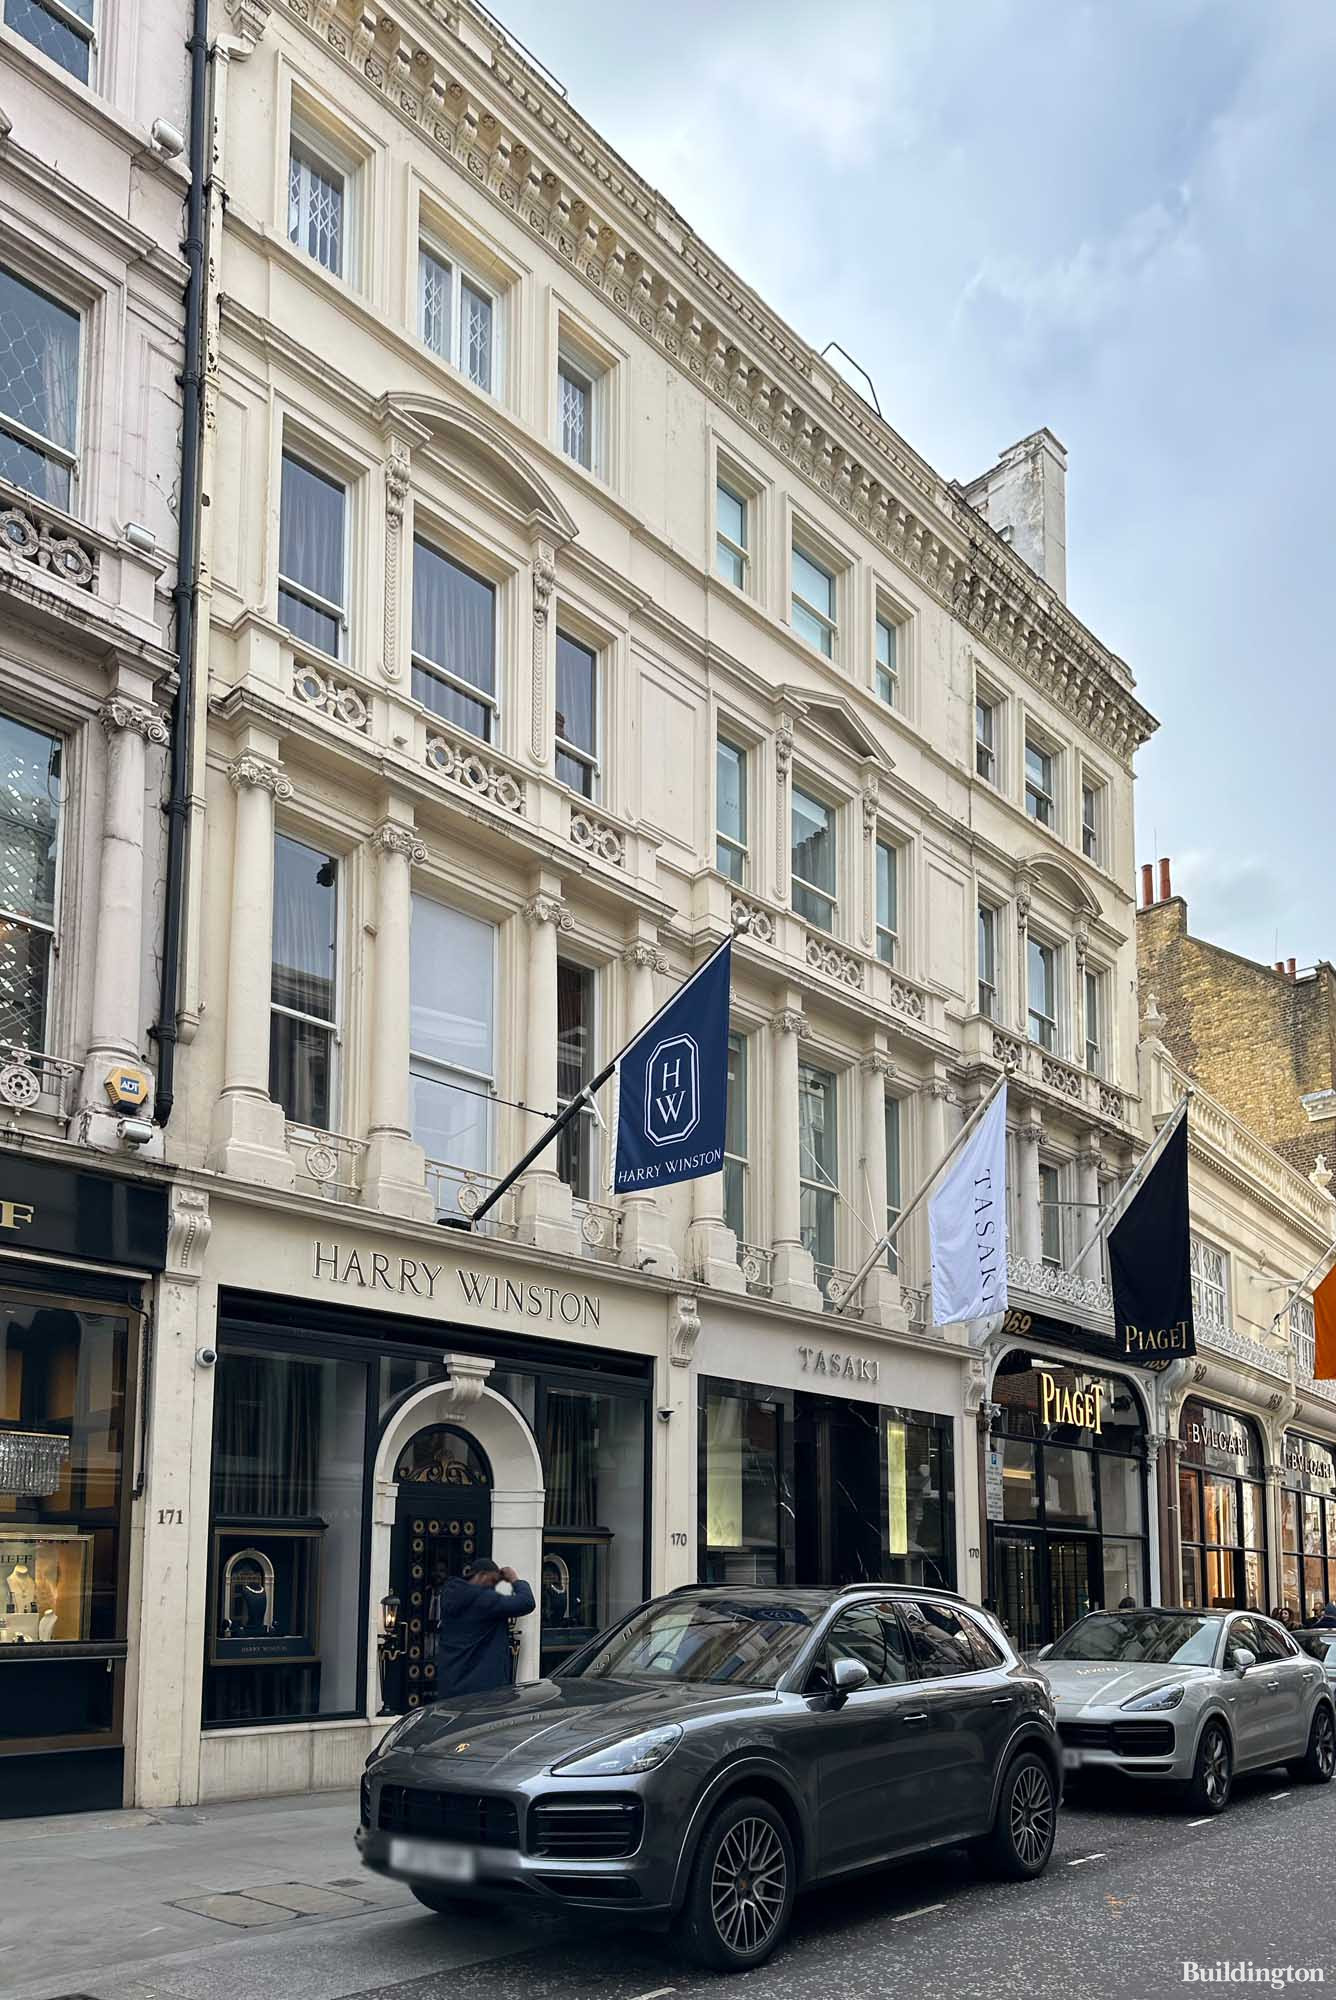 Harry Winston store at 171 New Bond Street in Mayfair, London W1.